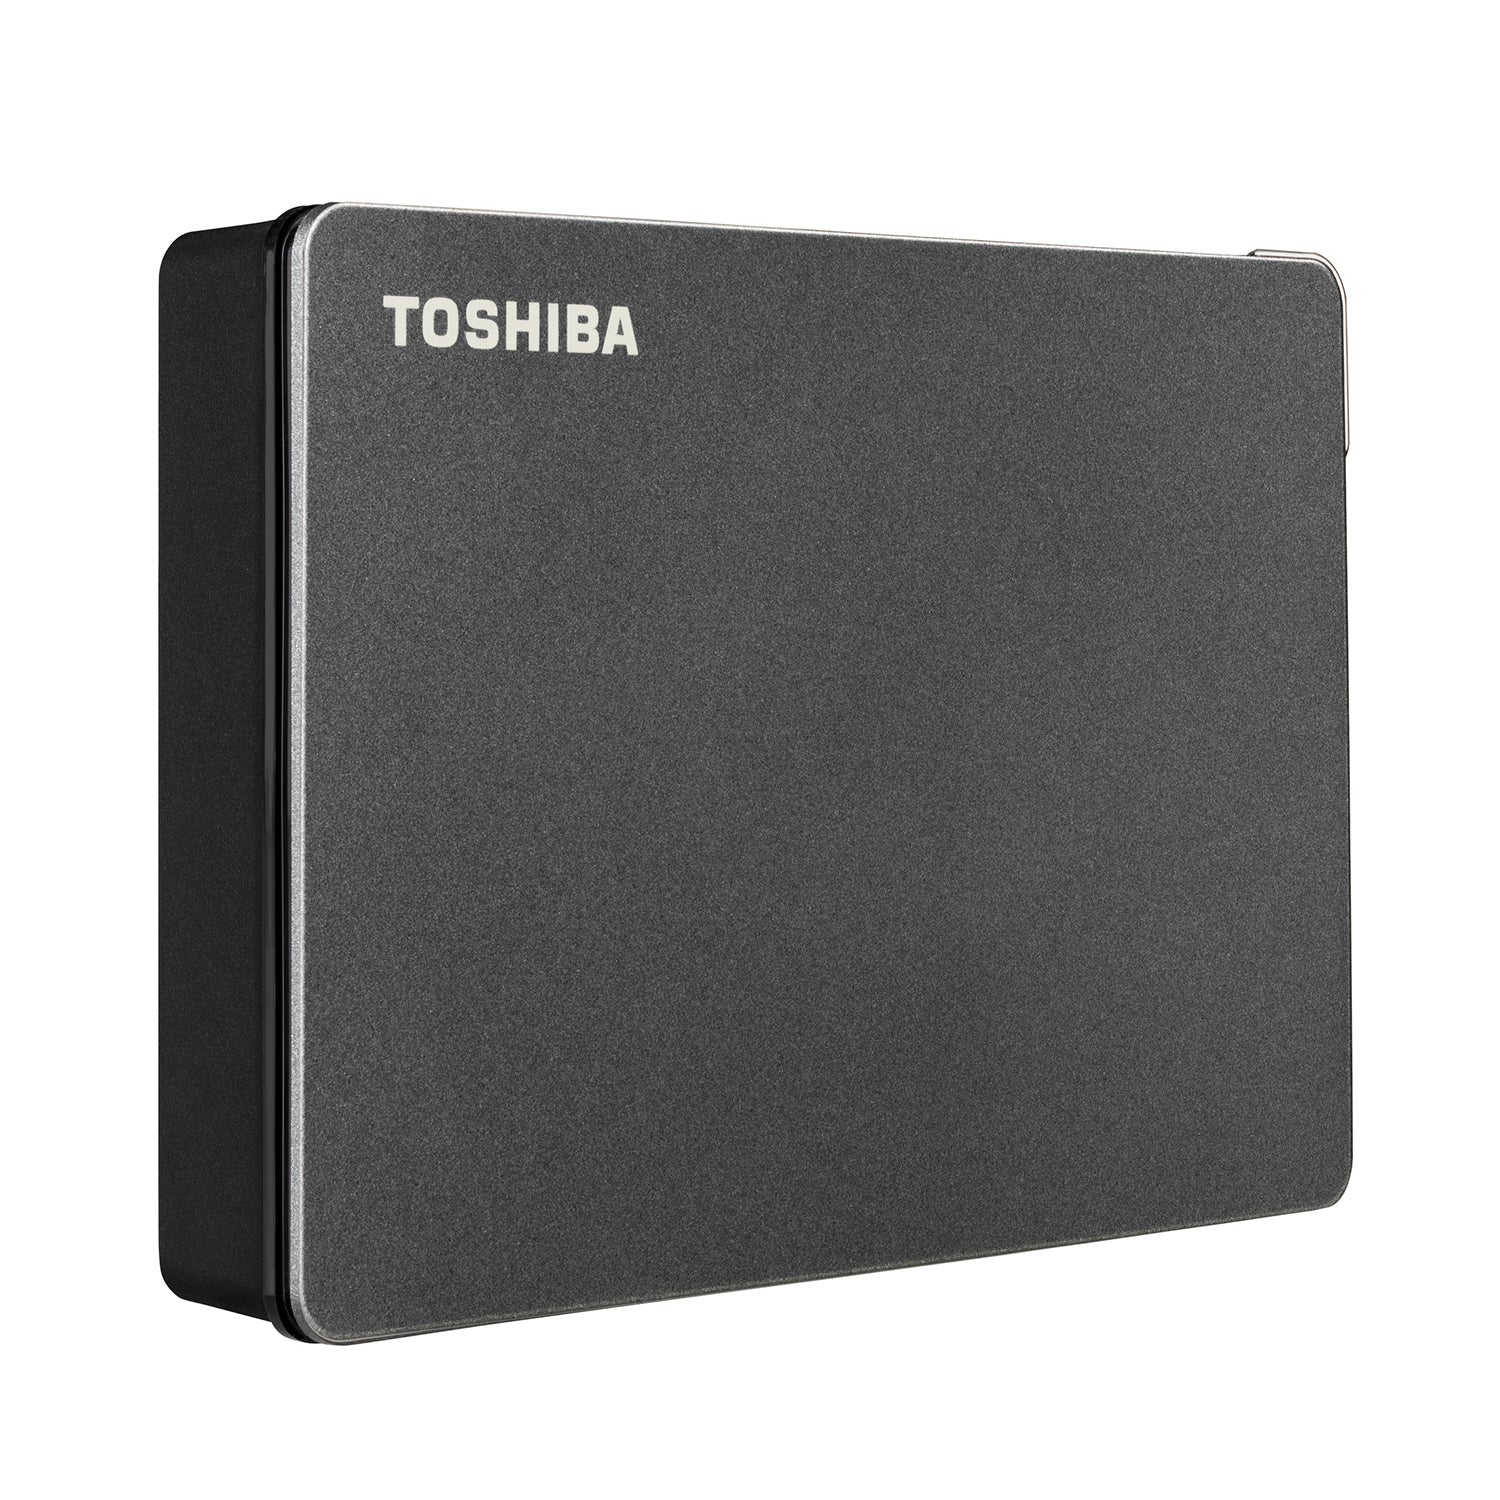 Disco Duro Externo Toshiba 4TB Canvio Gaming Negro